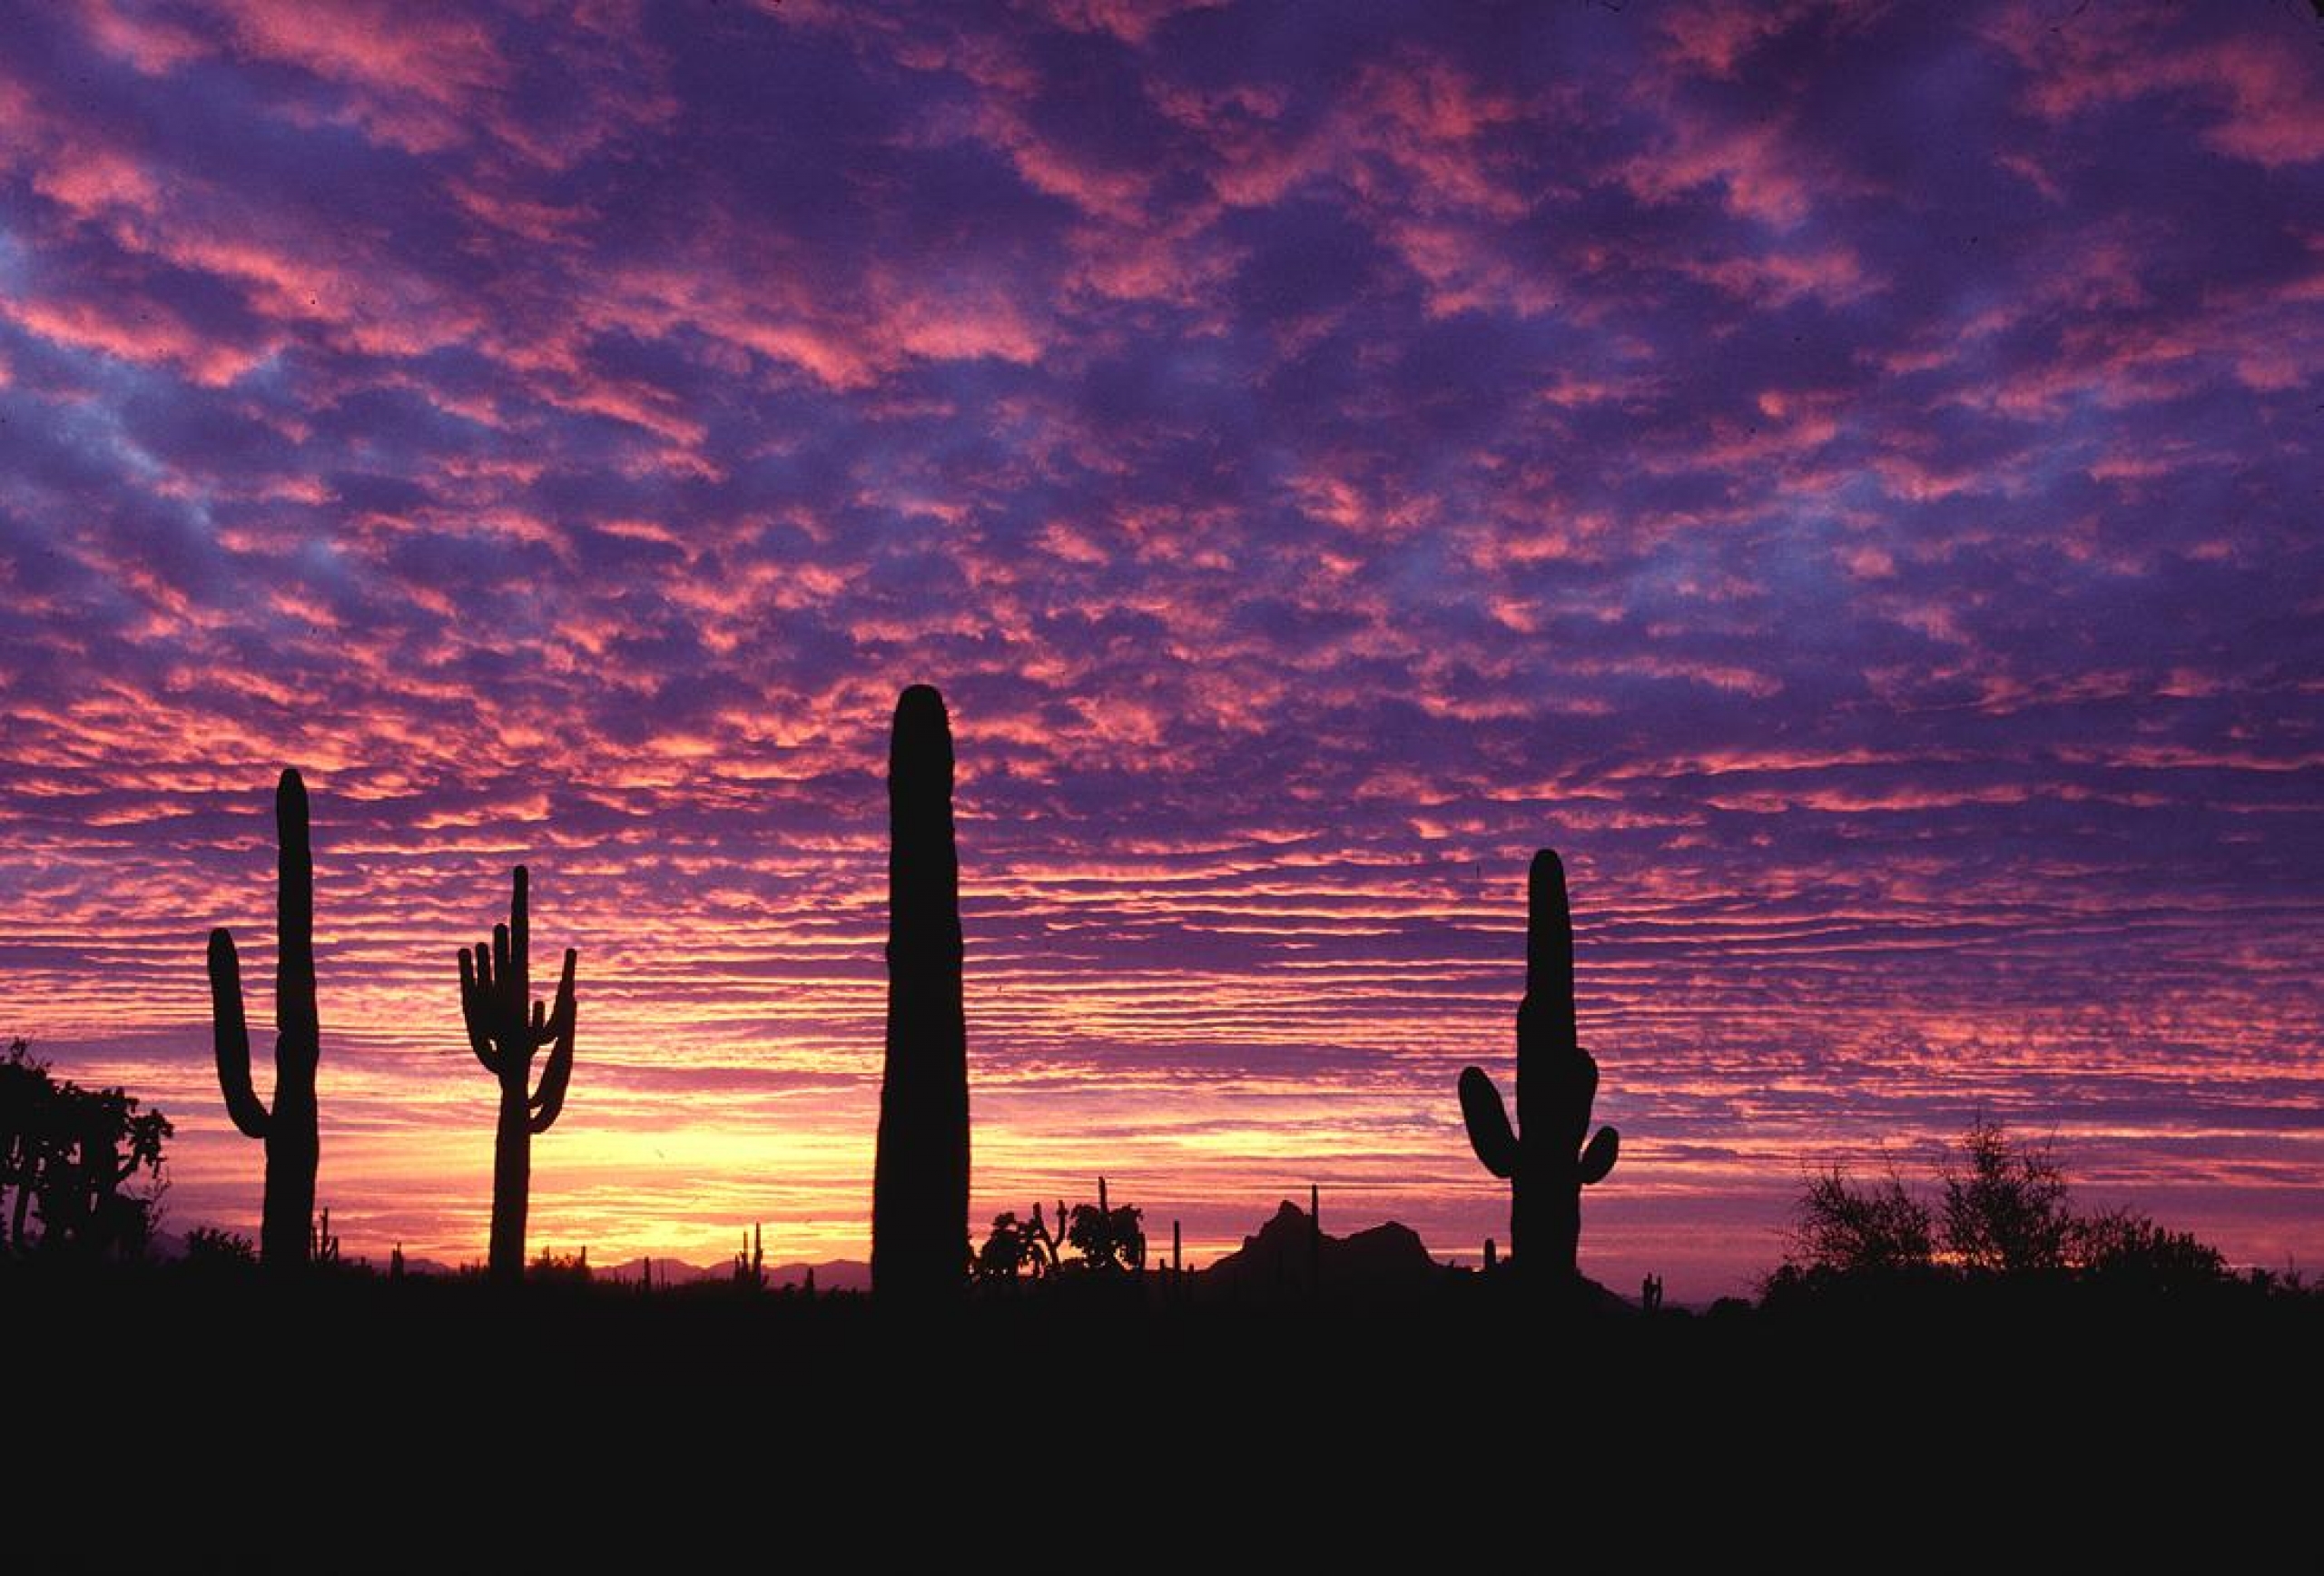  together Arizona sunset serves inspiration wallpapers backgrounds 2560x1736